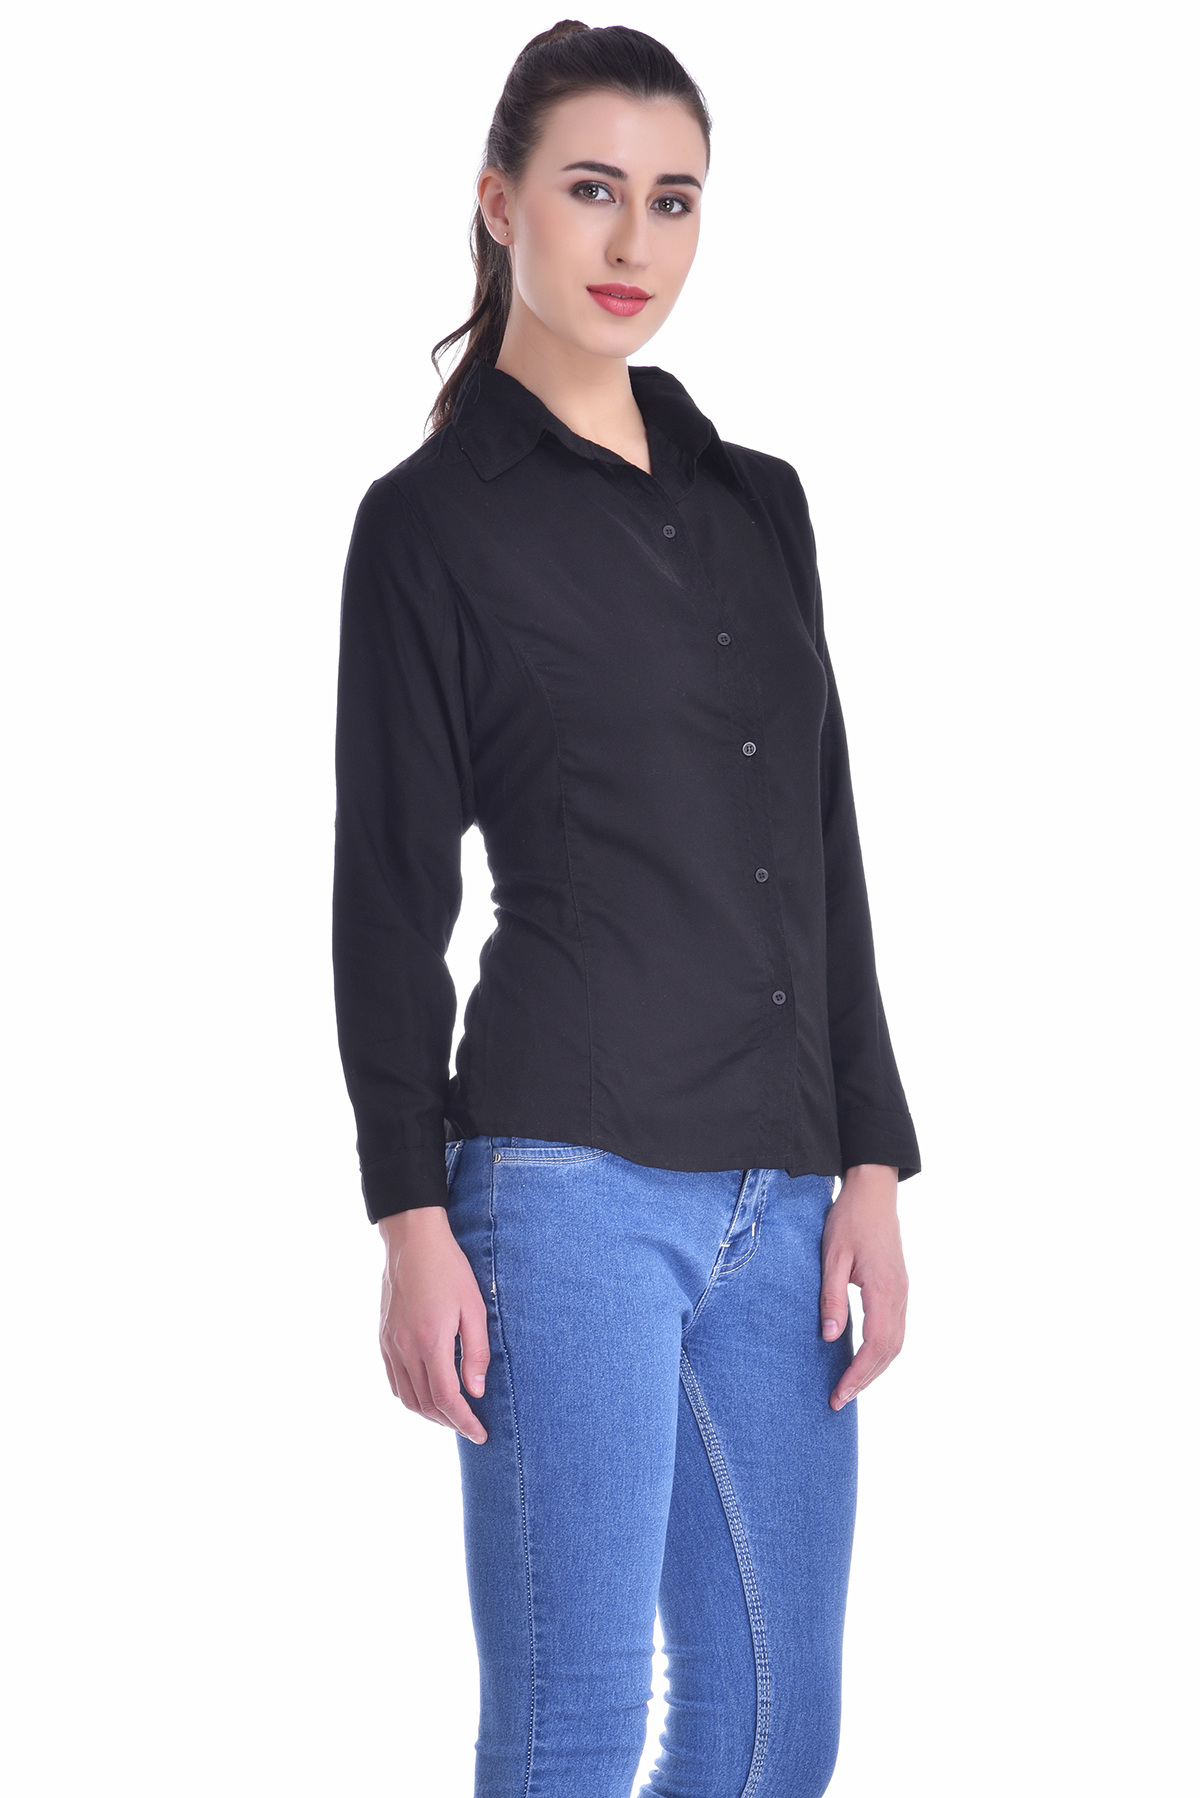 Buy Westrobe Womens Black Plain Rayon Shirt Online @ ₹799 from ShopClues